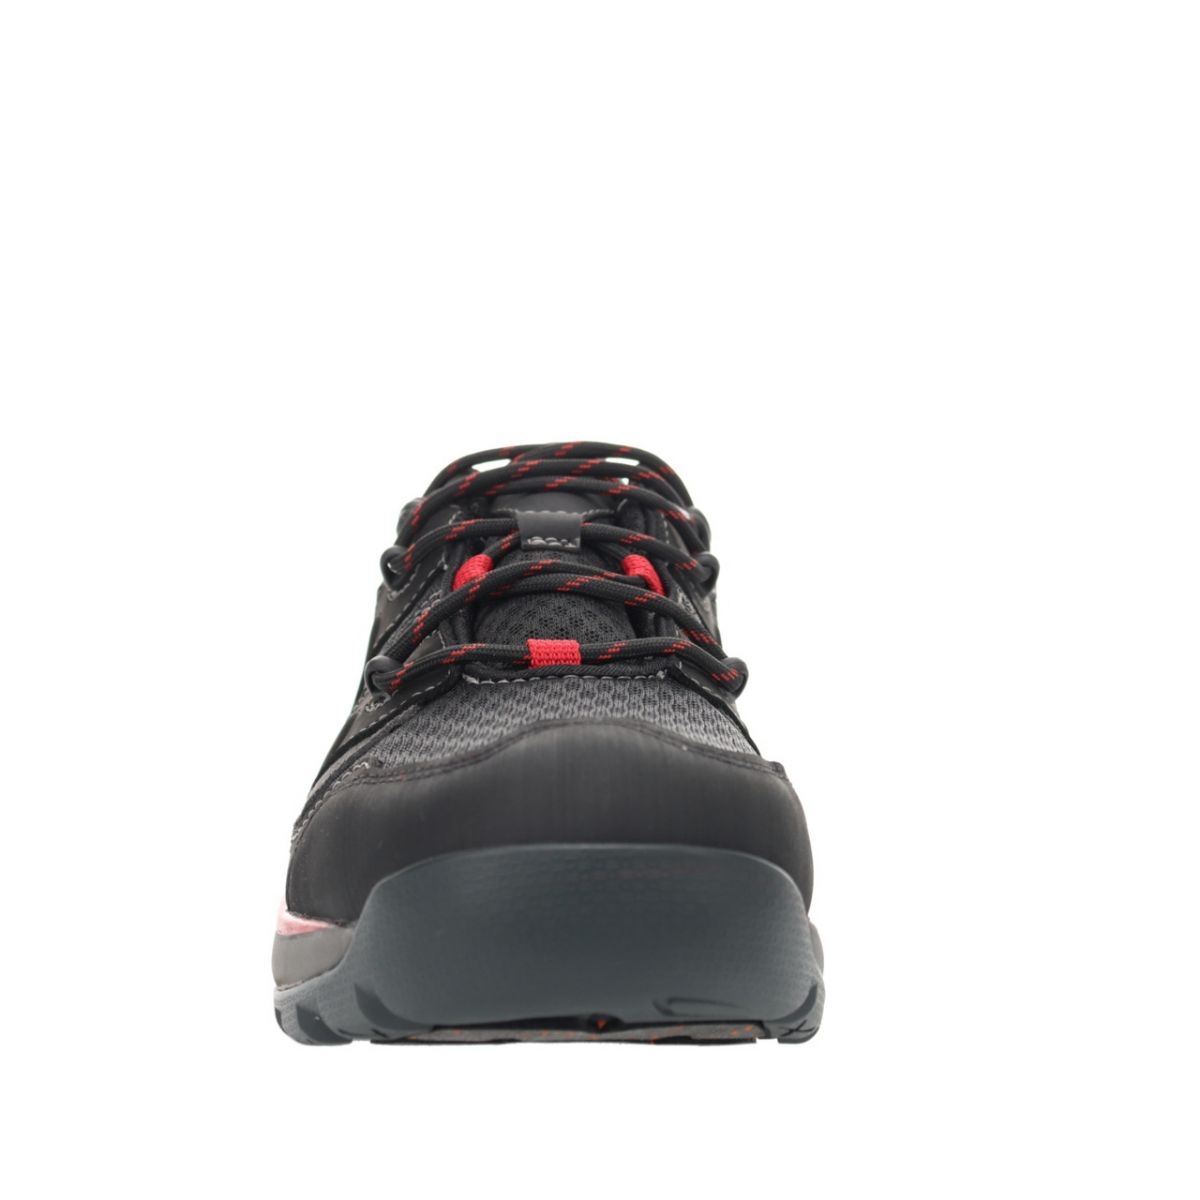 Propet Men's Vercors Hiking Shoe Black/Red - MOA002SBRD BLACK/RED - BLACK/RED, 16